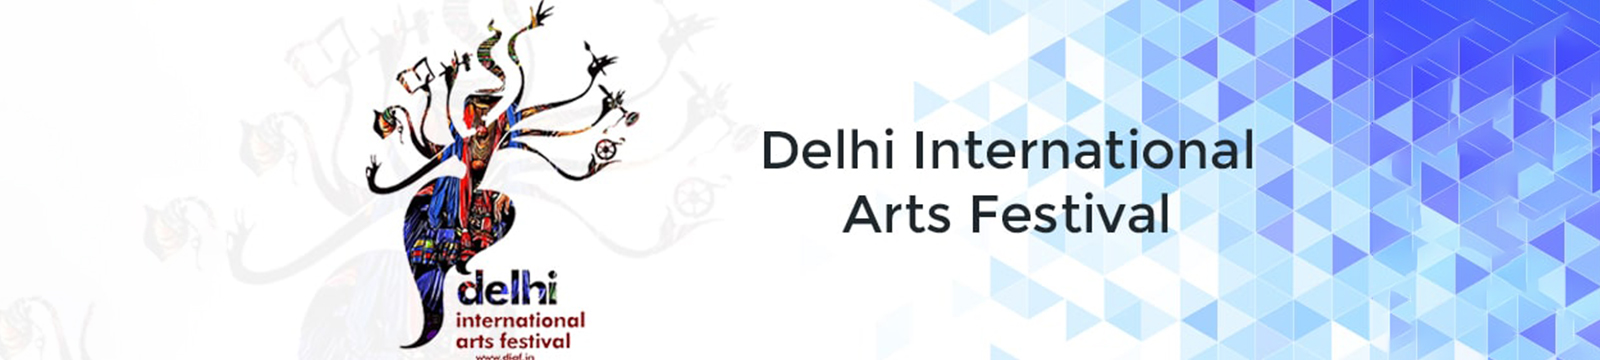 Back with a Bang – The Delhi International Arts Festival